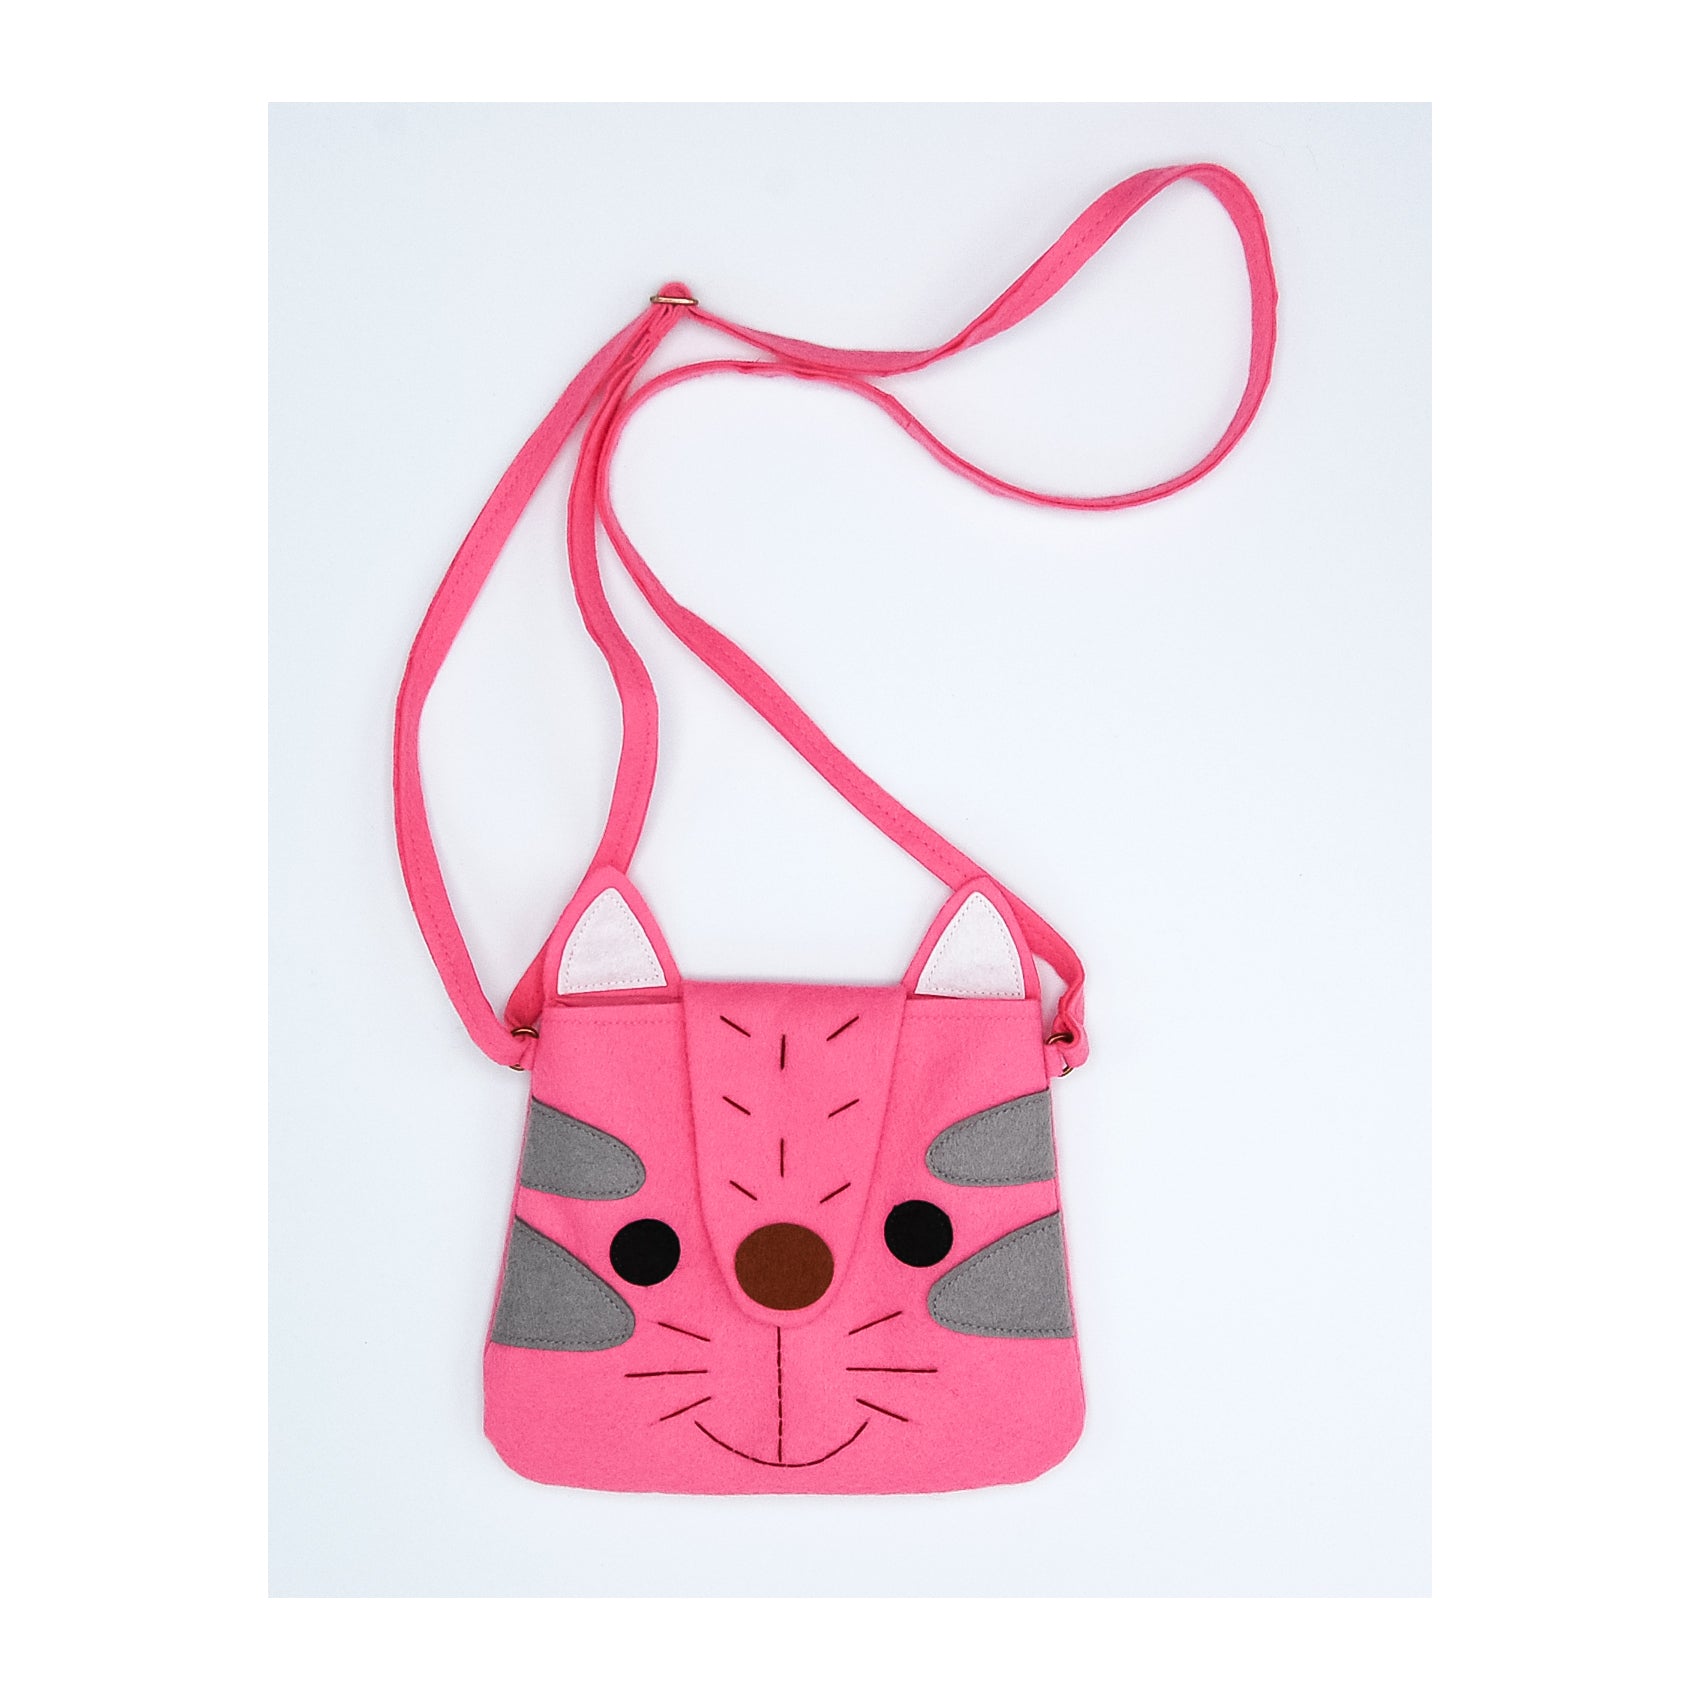 Cute Kitty Bag - Pink & Gray